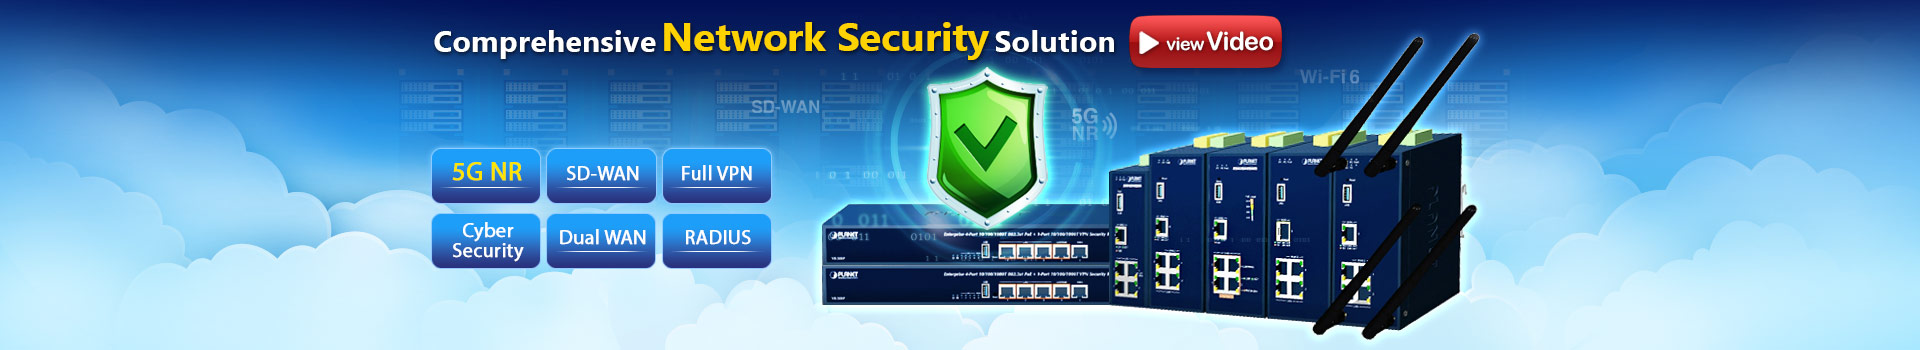 Comprehensive Network Security Solution, Video, 5G NR, SD-WAN, Full VPN, Cyber Security, Dual WAN, Radius Server